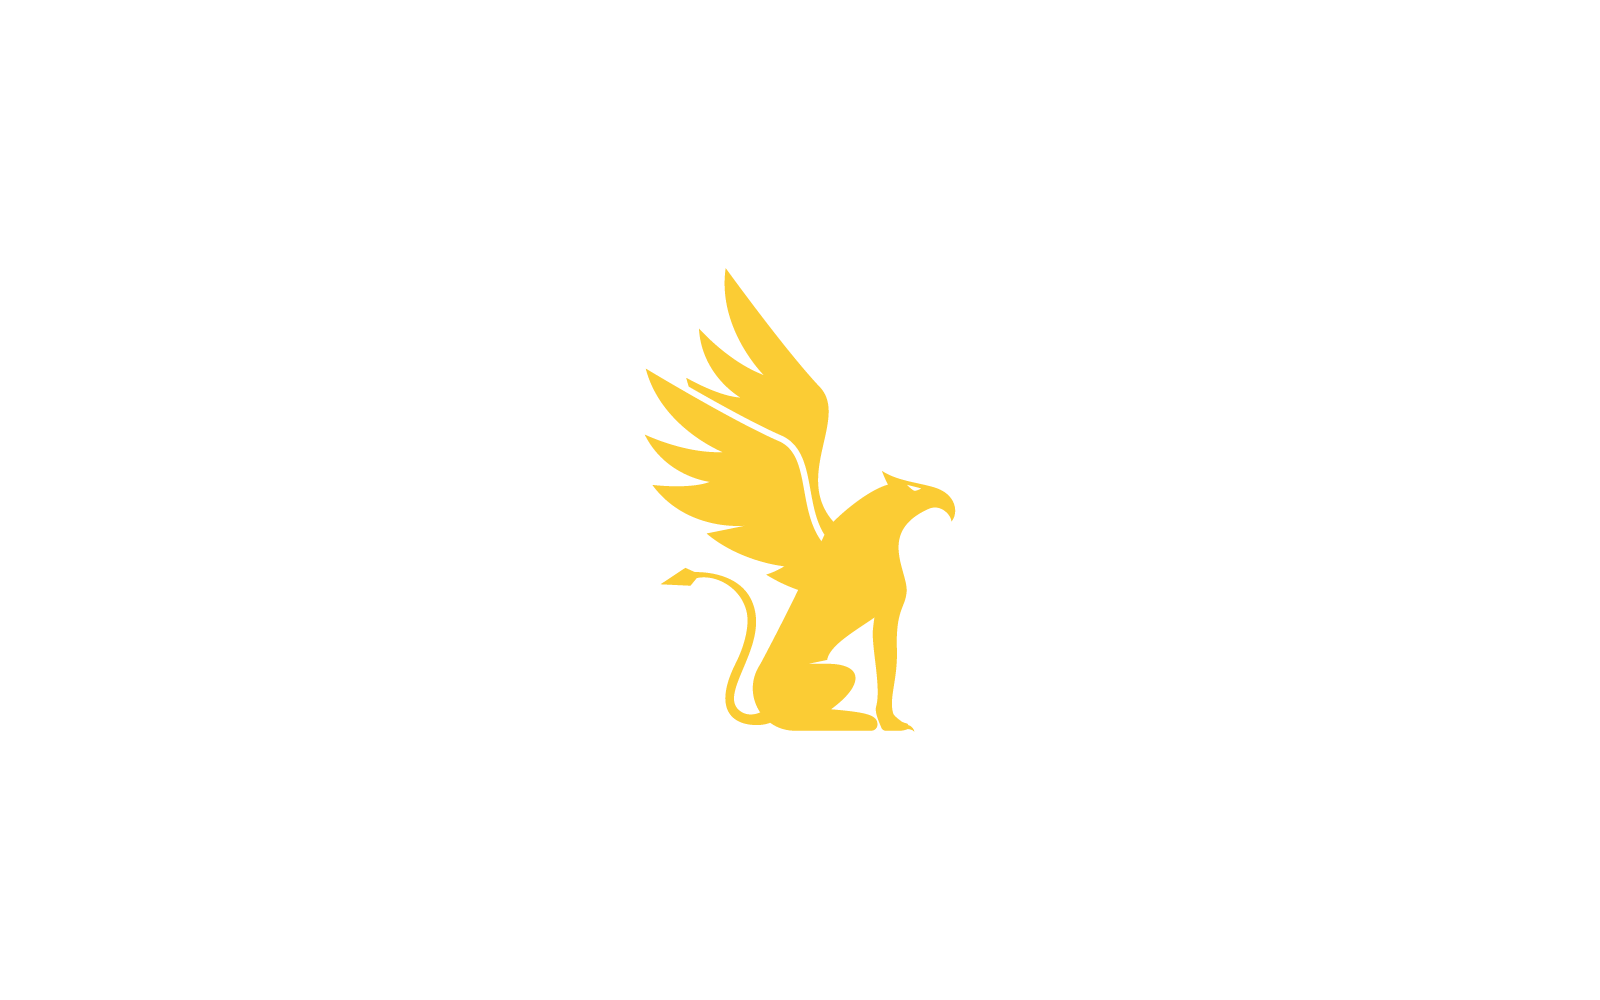 Griffin logo illustration vector flat design